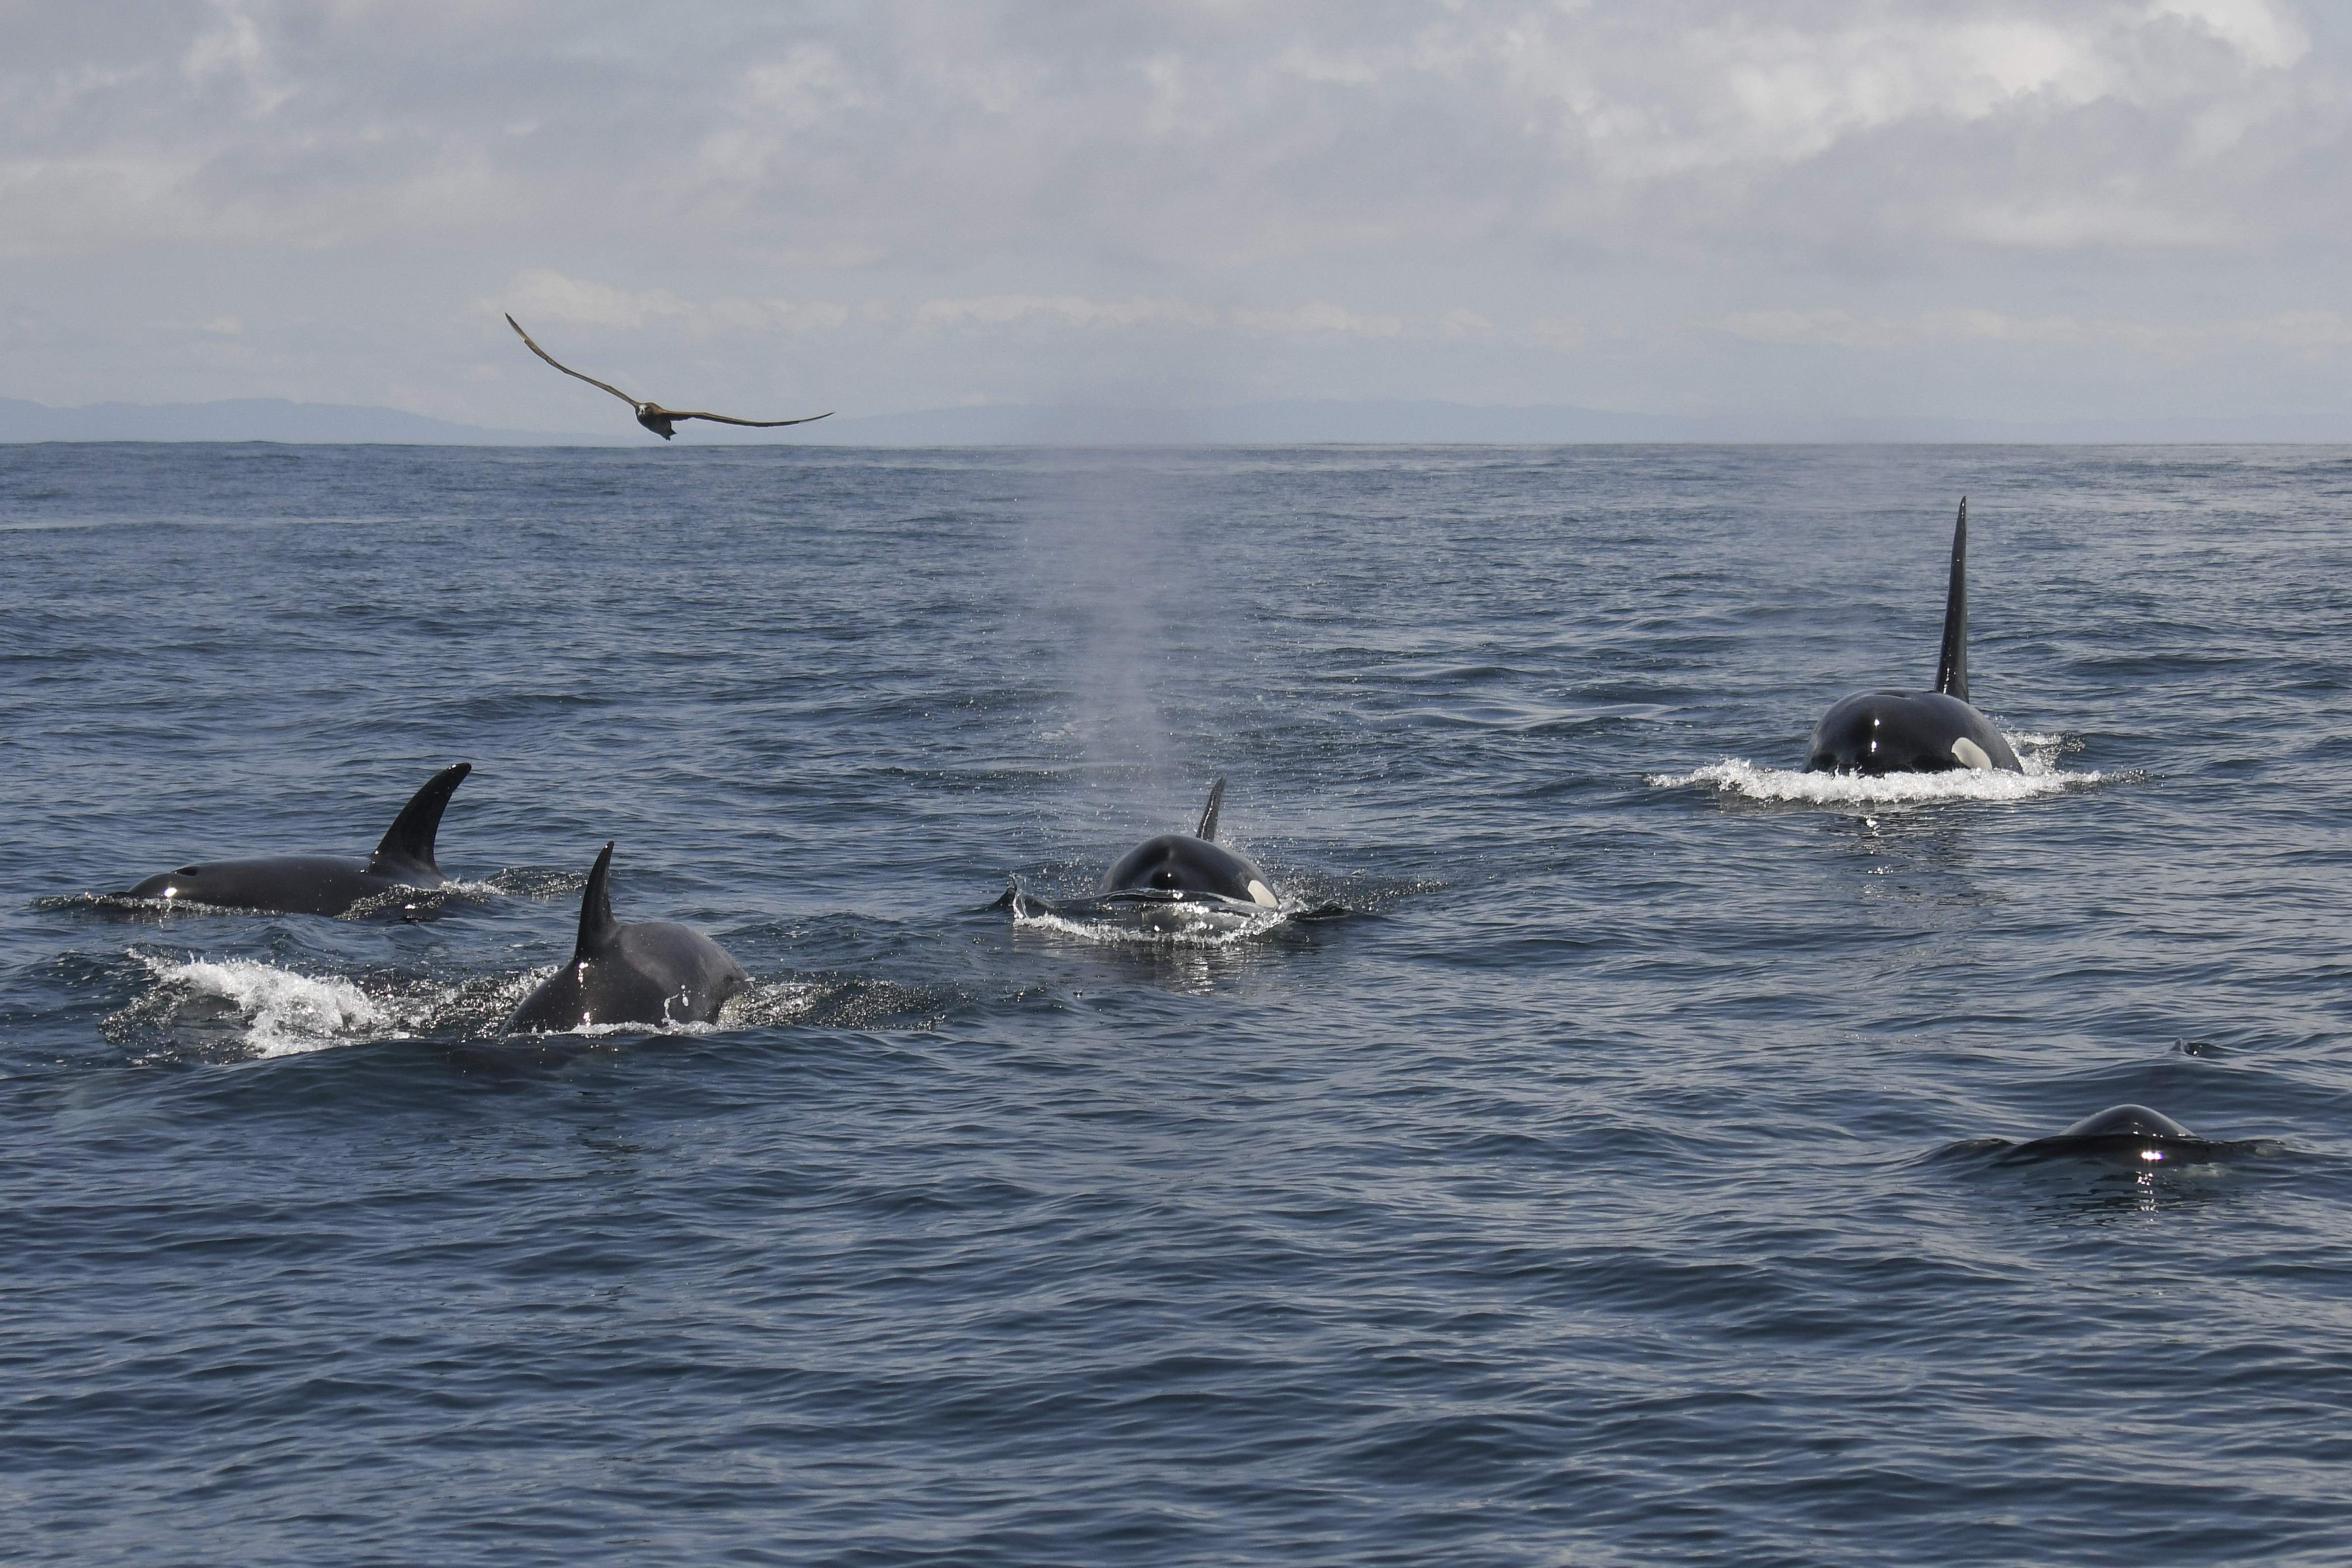 Tras los extraños ataques de orcas a barcos en Europa, detectaron un inusual grupo de 20 ballenas en San Francisco